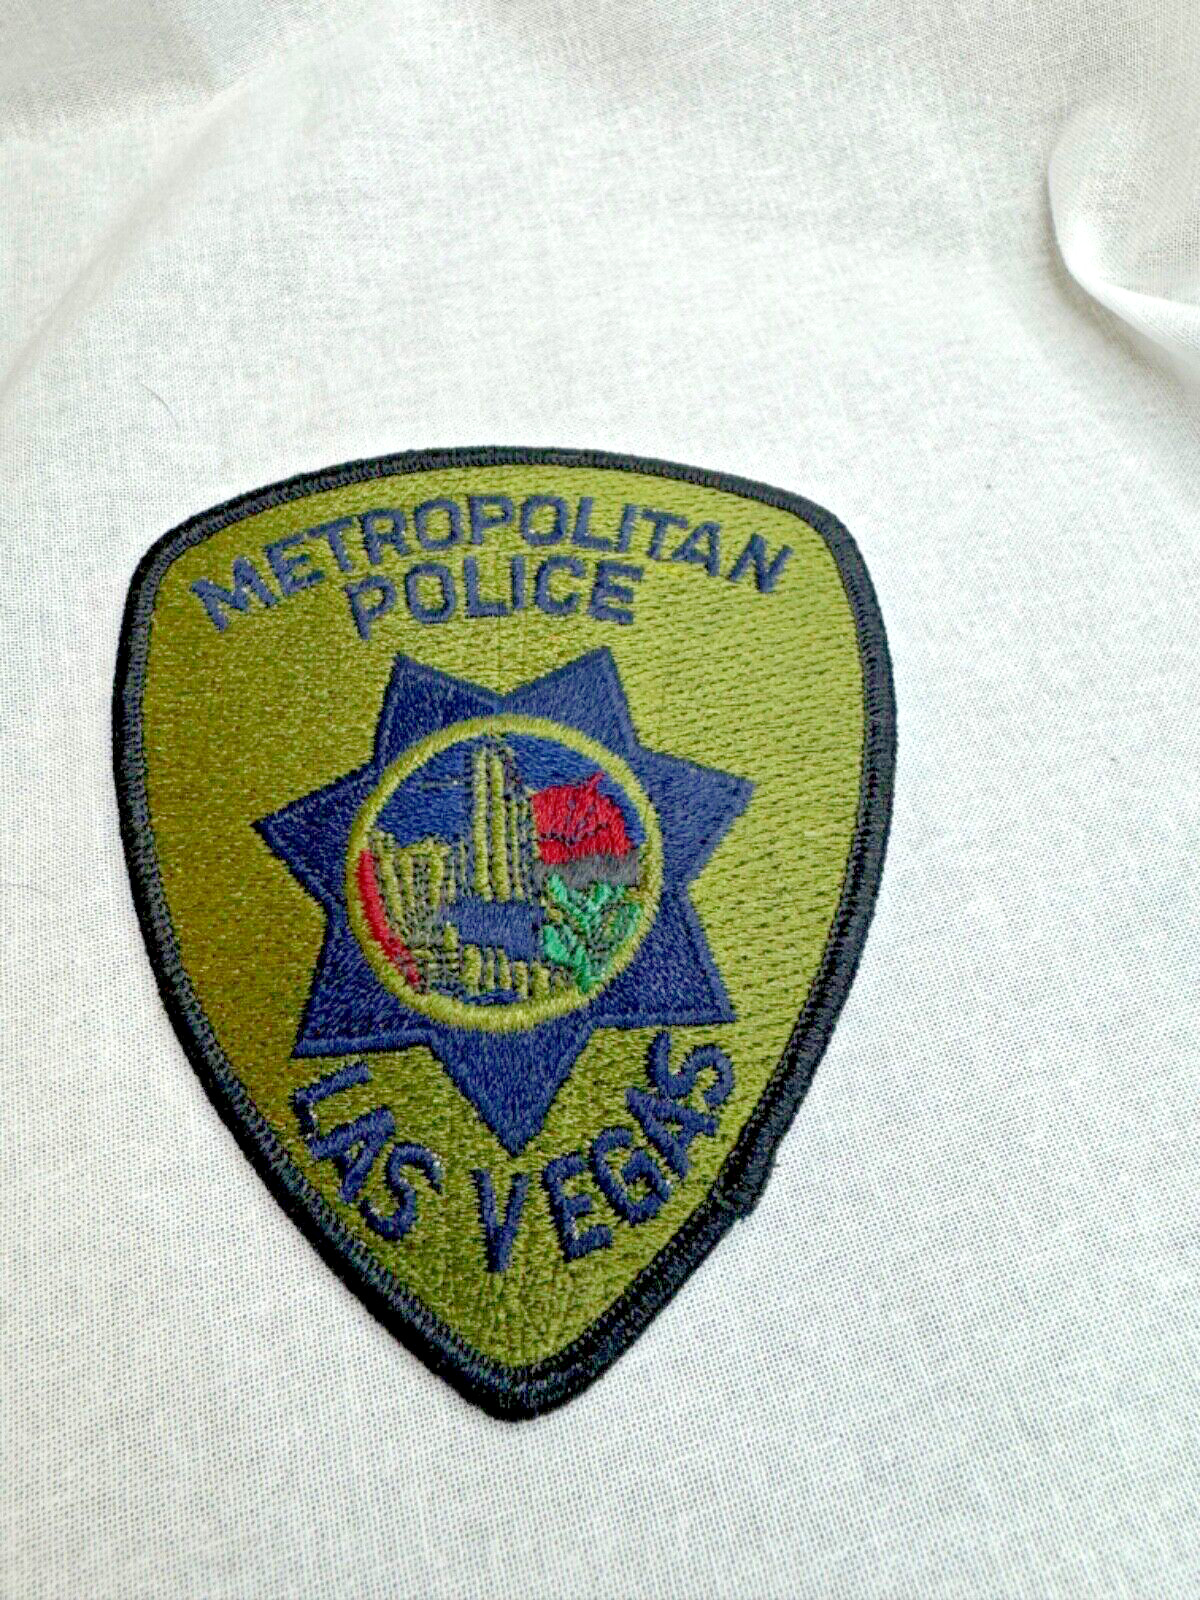 Las Vegas Metro Police Uniform Patch New